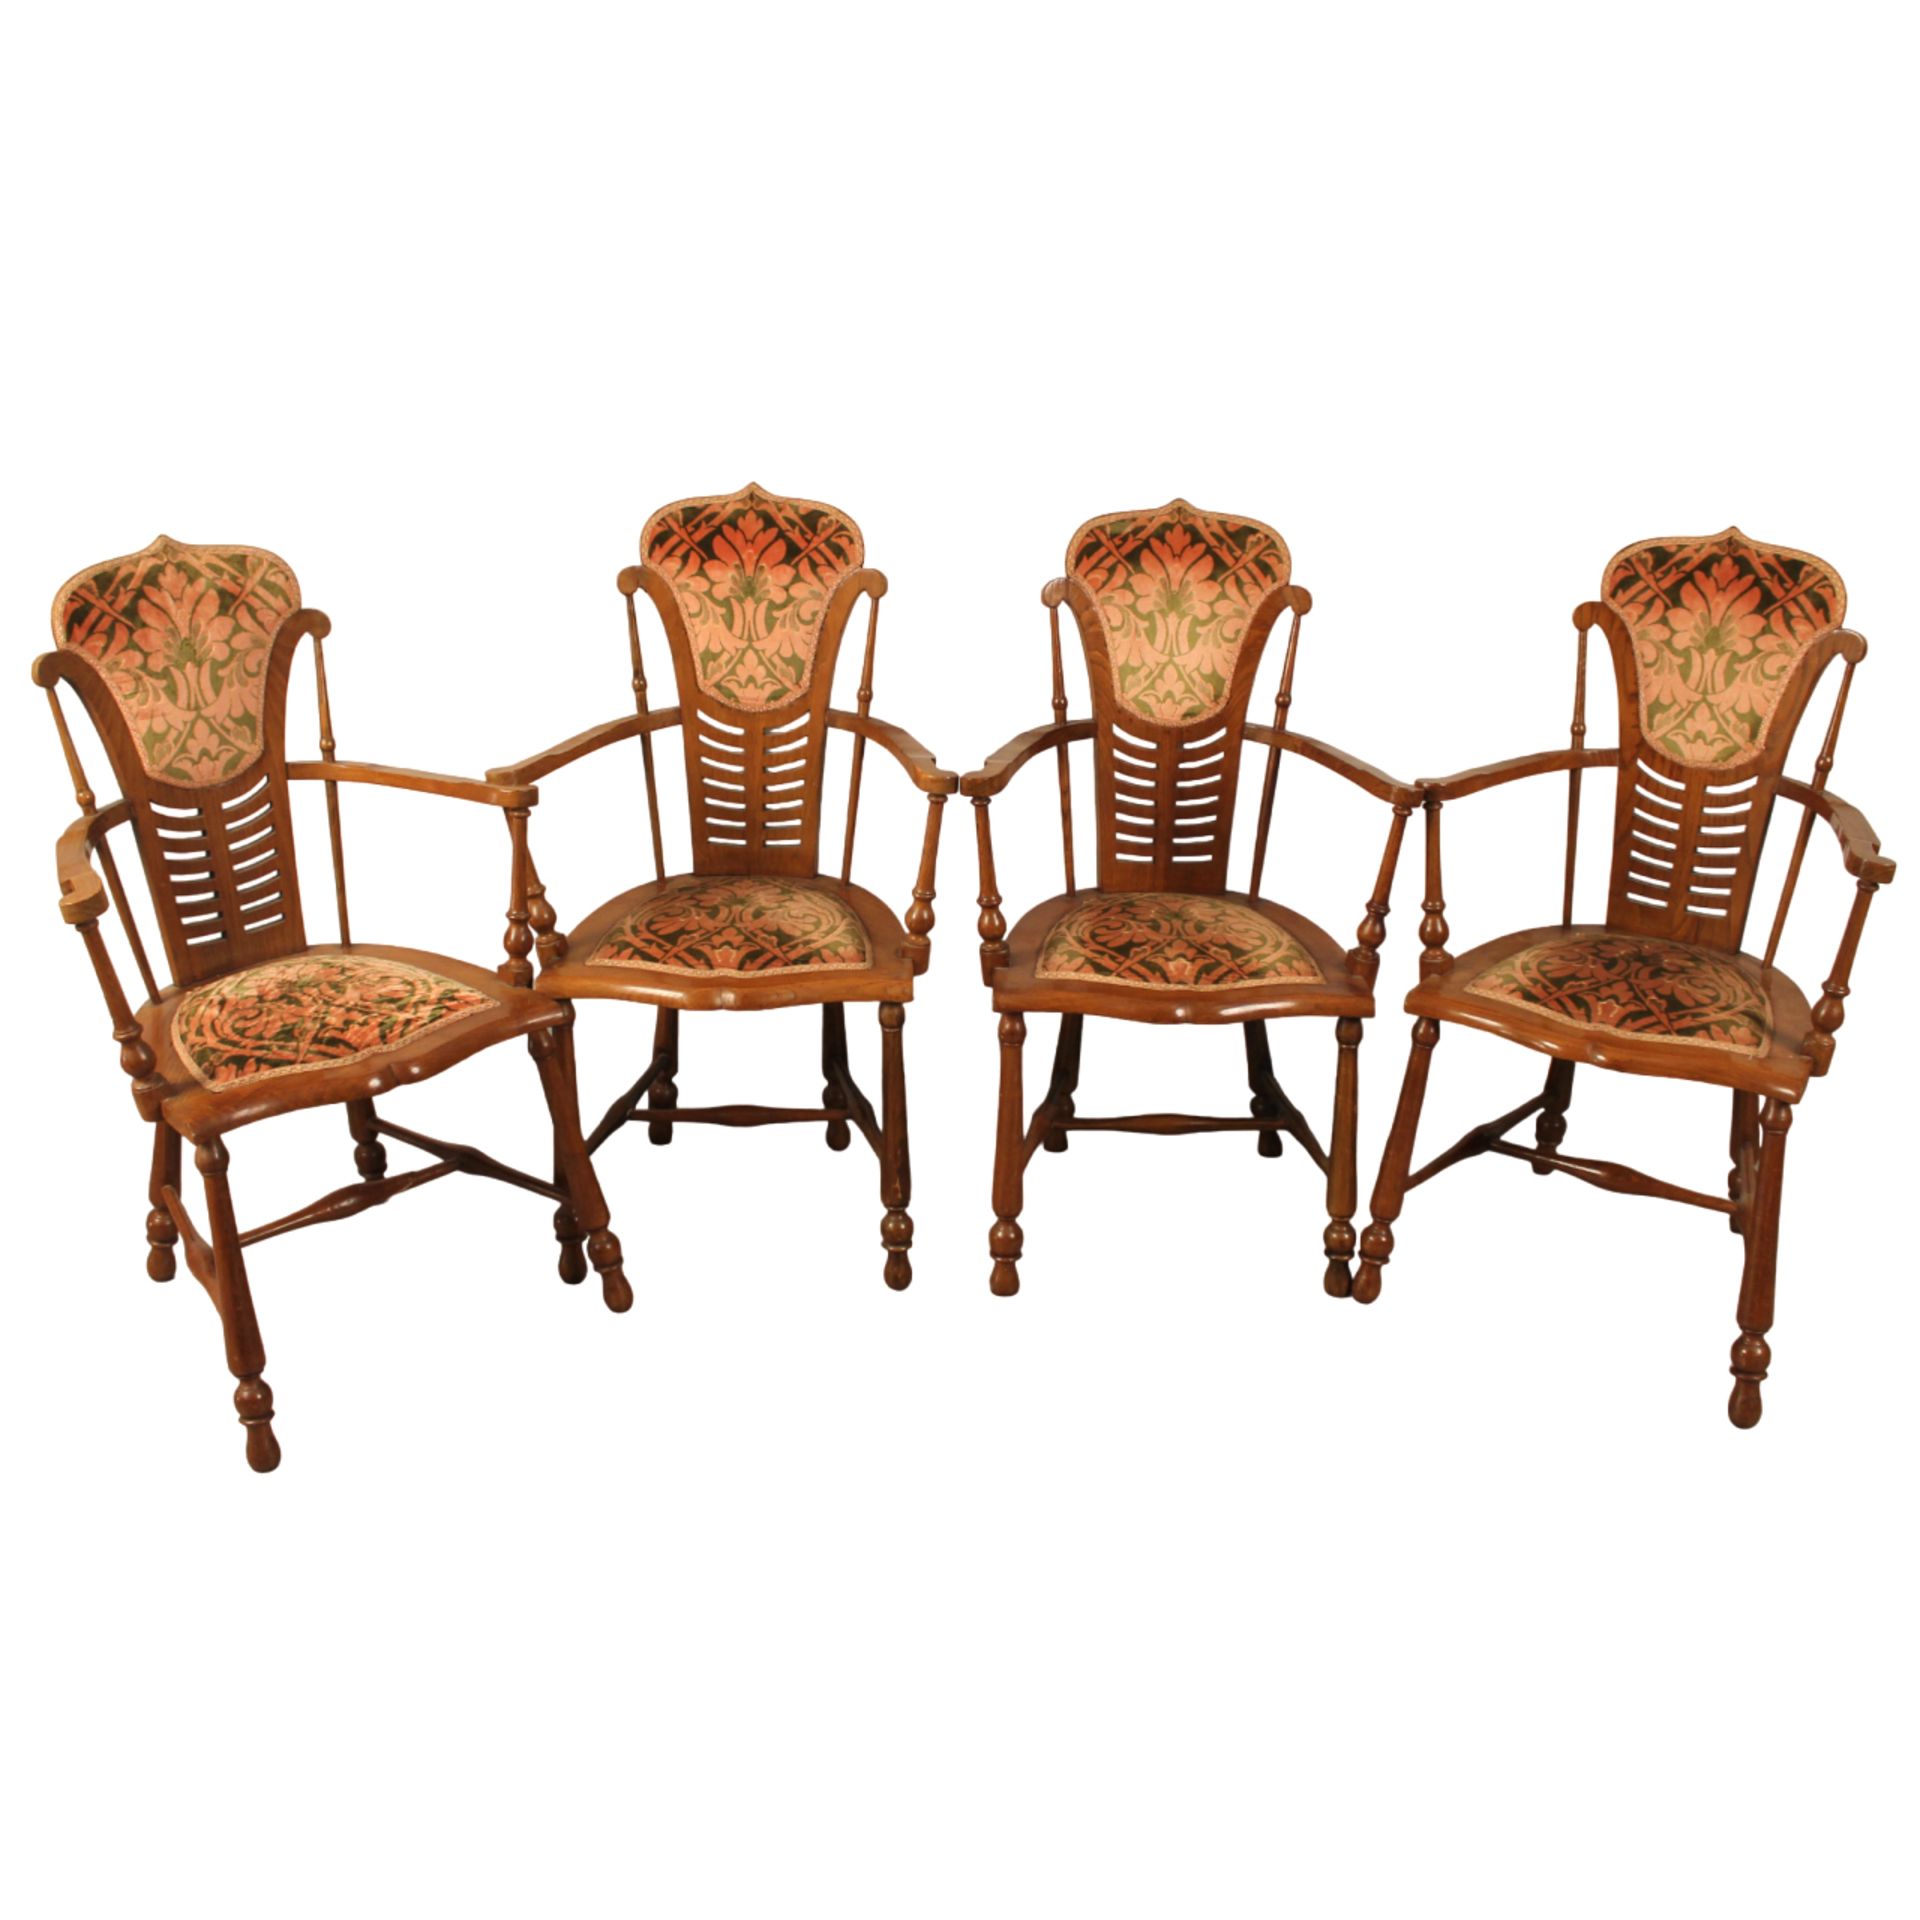 Quattro poltrone - Four armchairs